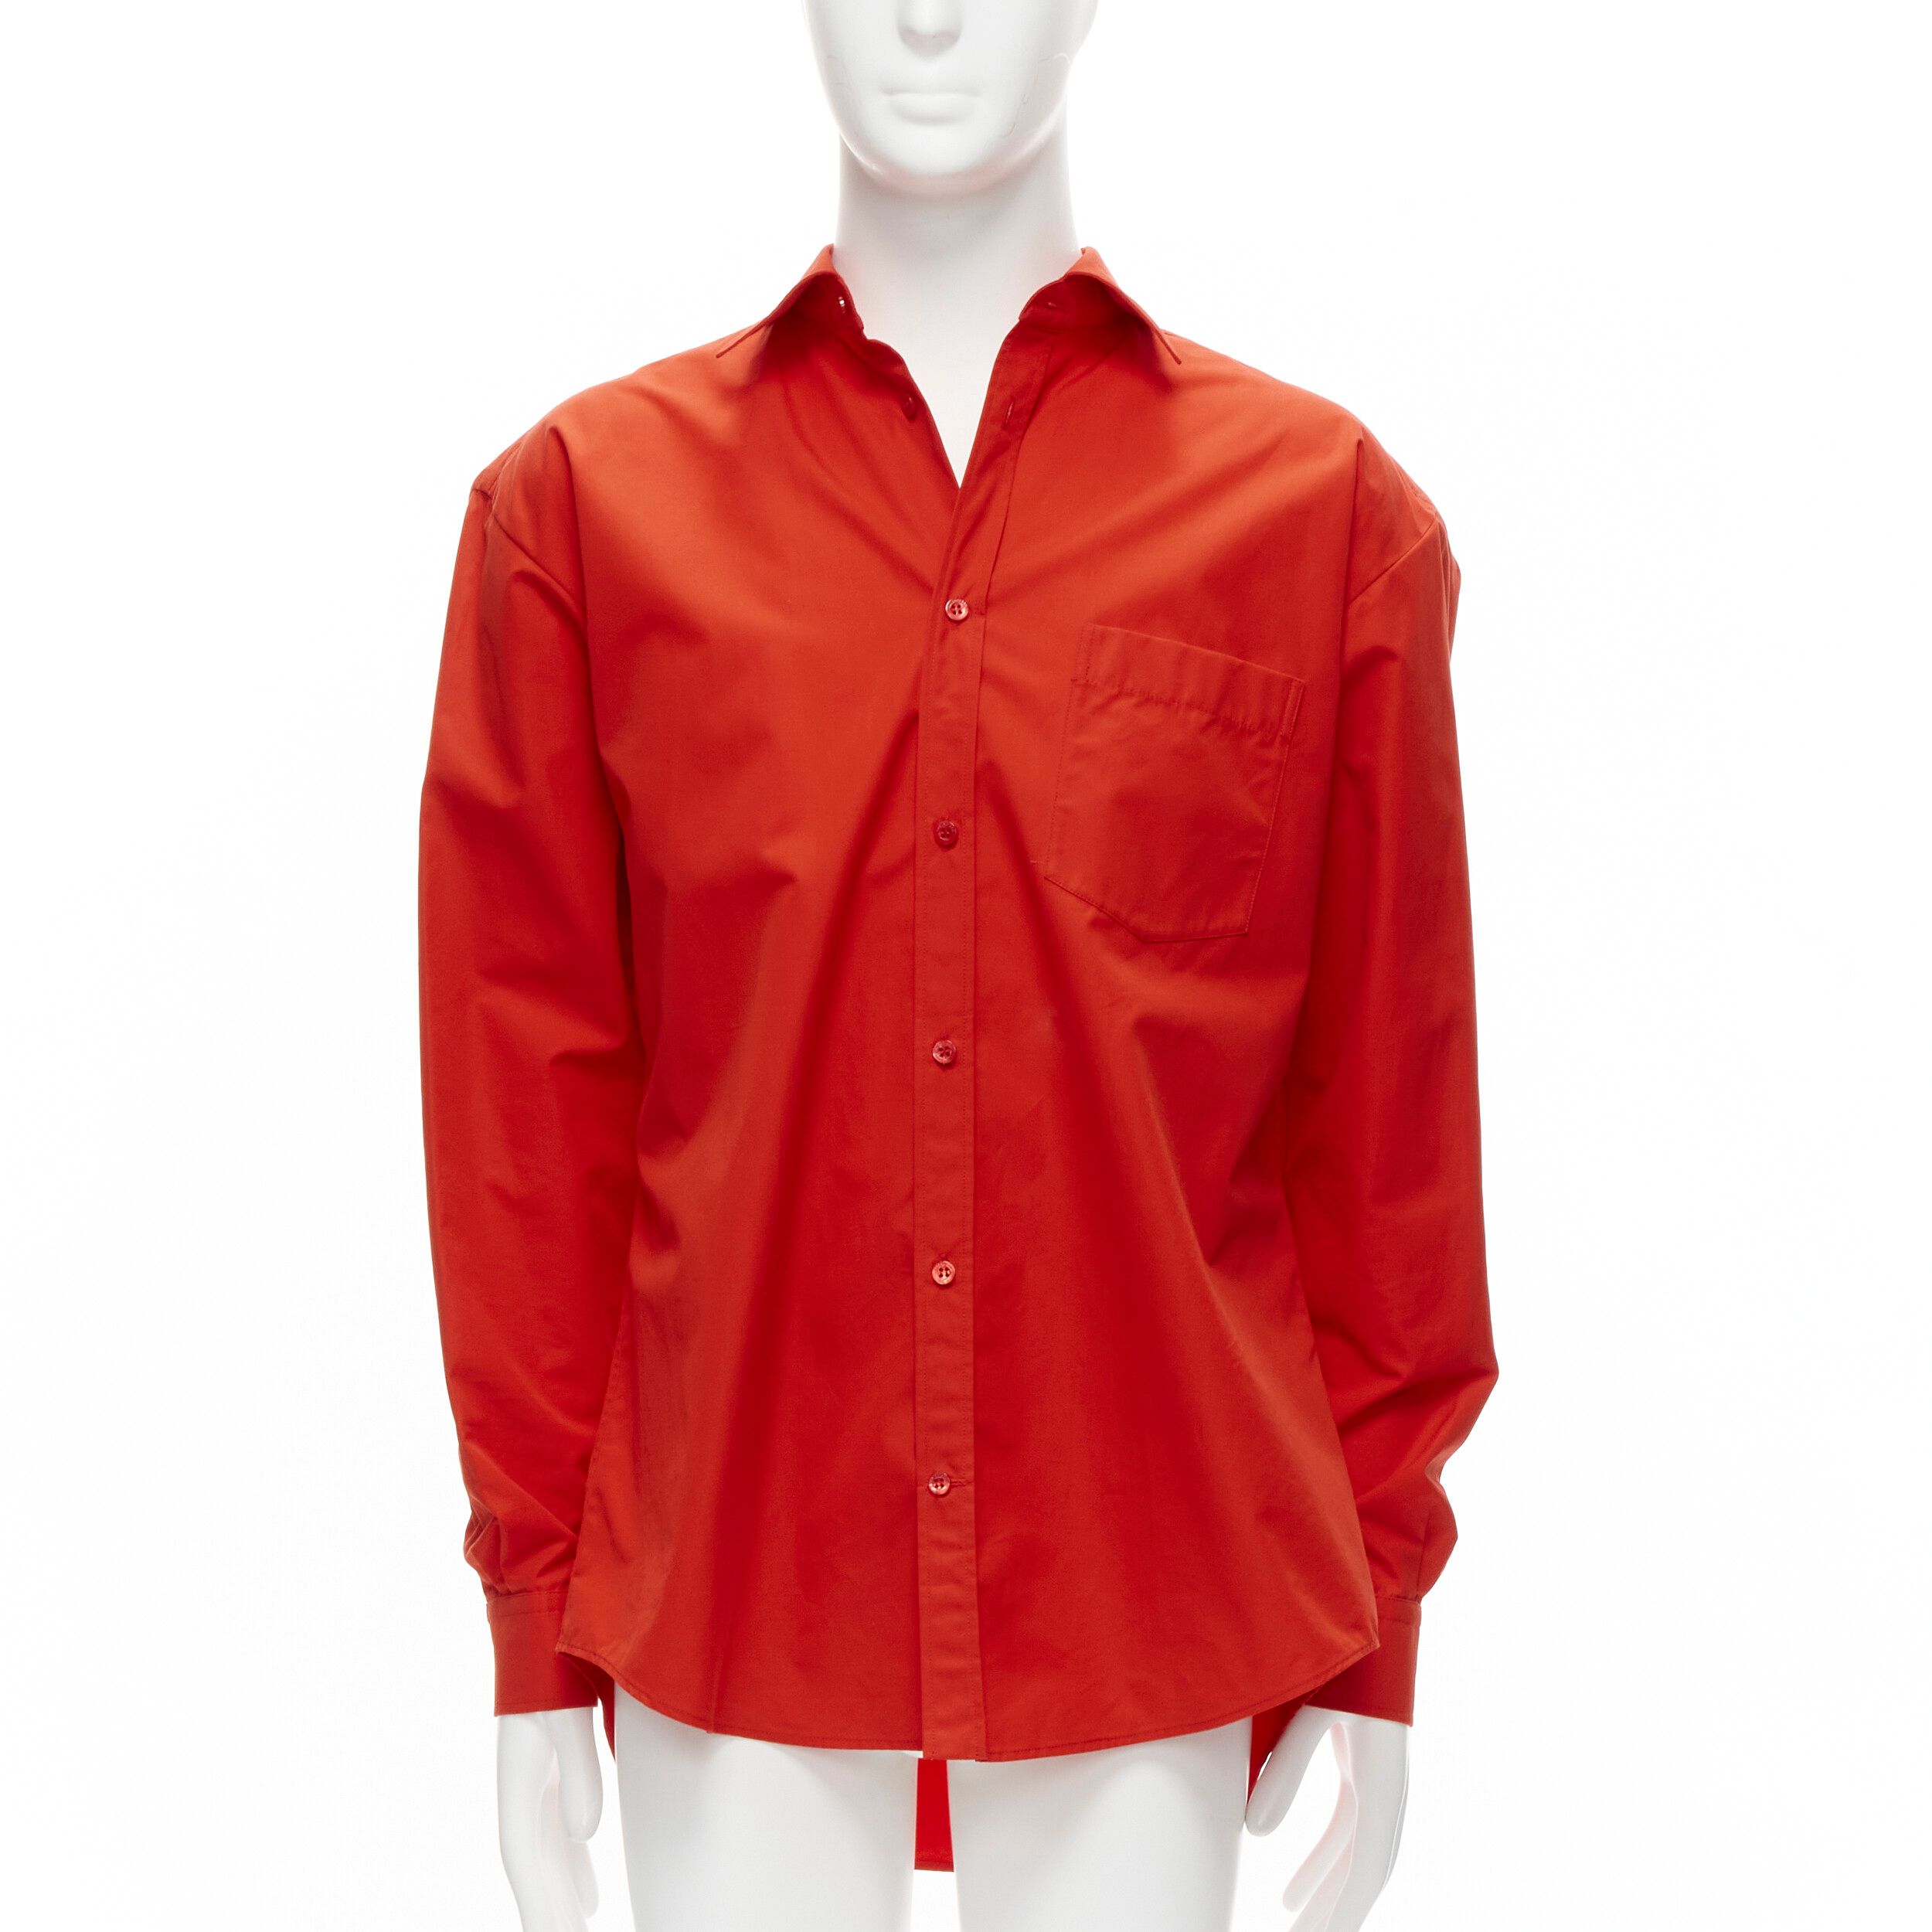 Balenciaga BALENCIAGA Cocoon red swing collar 3D cut oversized button down shirt Size M / US 6-8 / IT 42-44 - 2 Preview